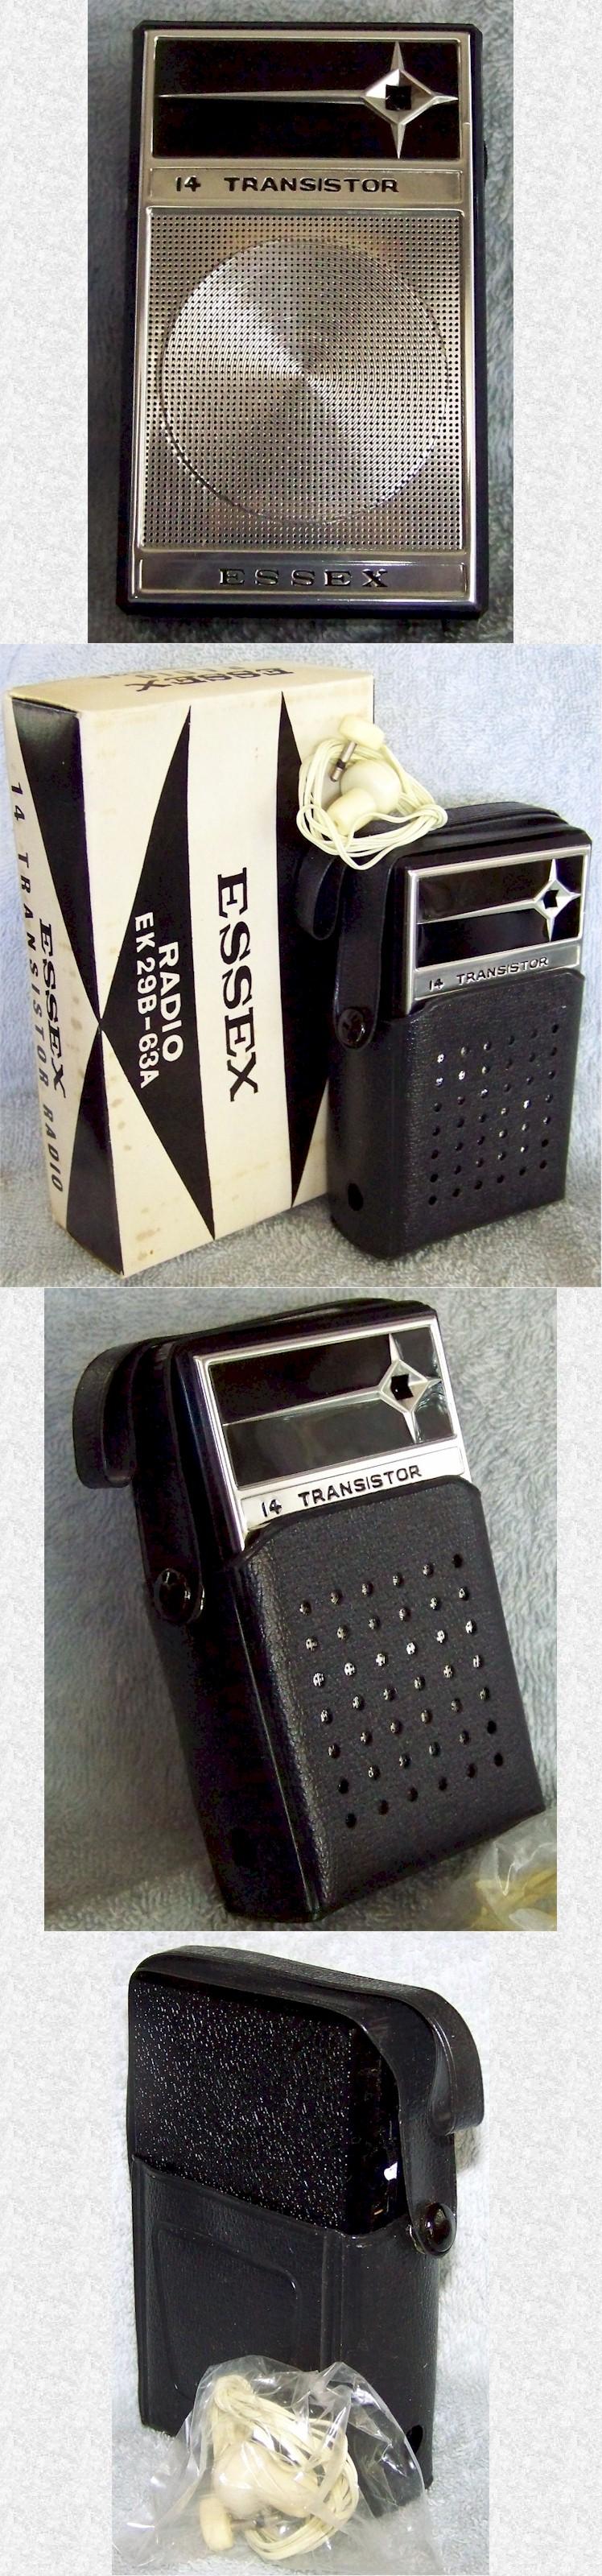 Essex EK29B-63A Pocket Transistor (late 60s)